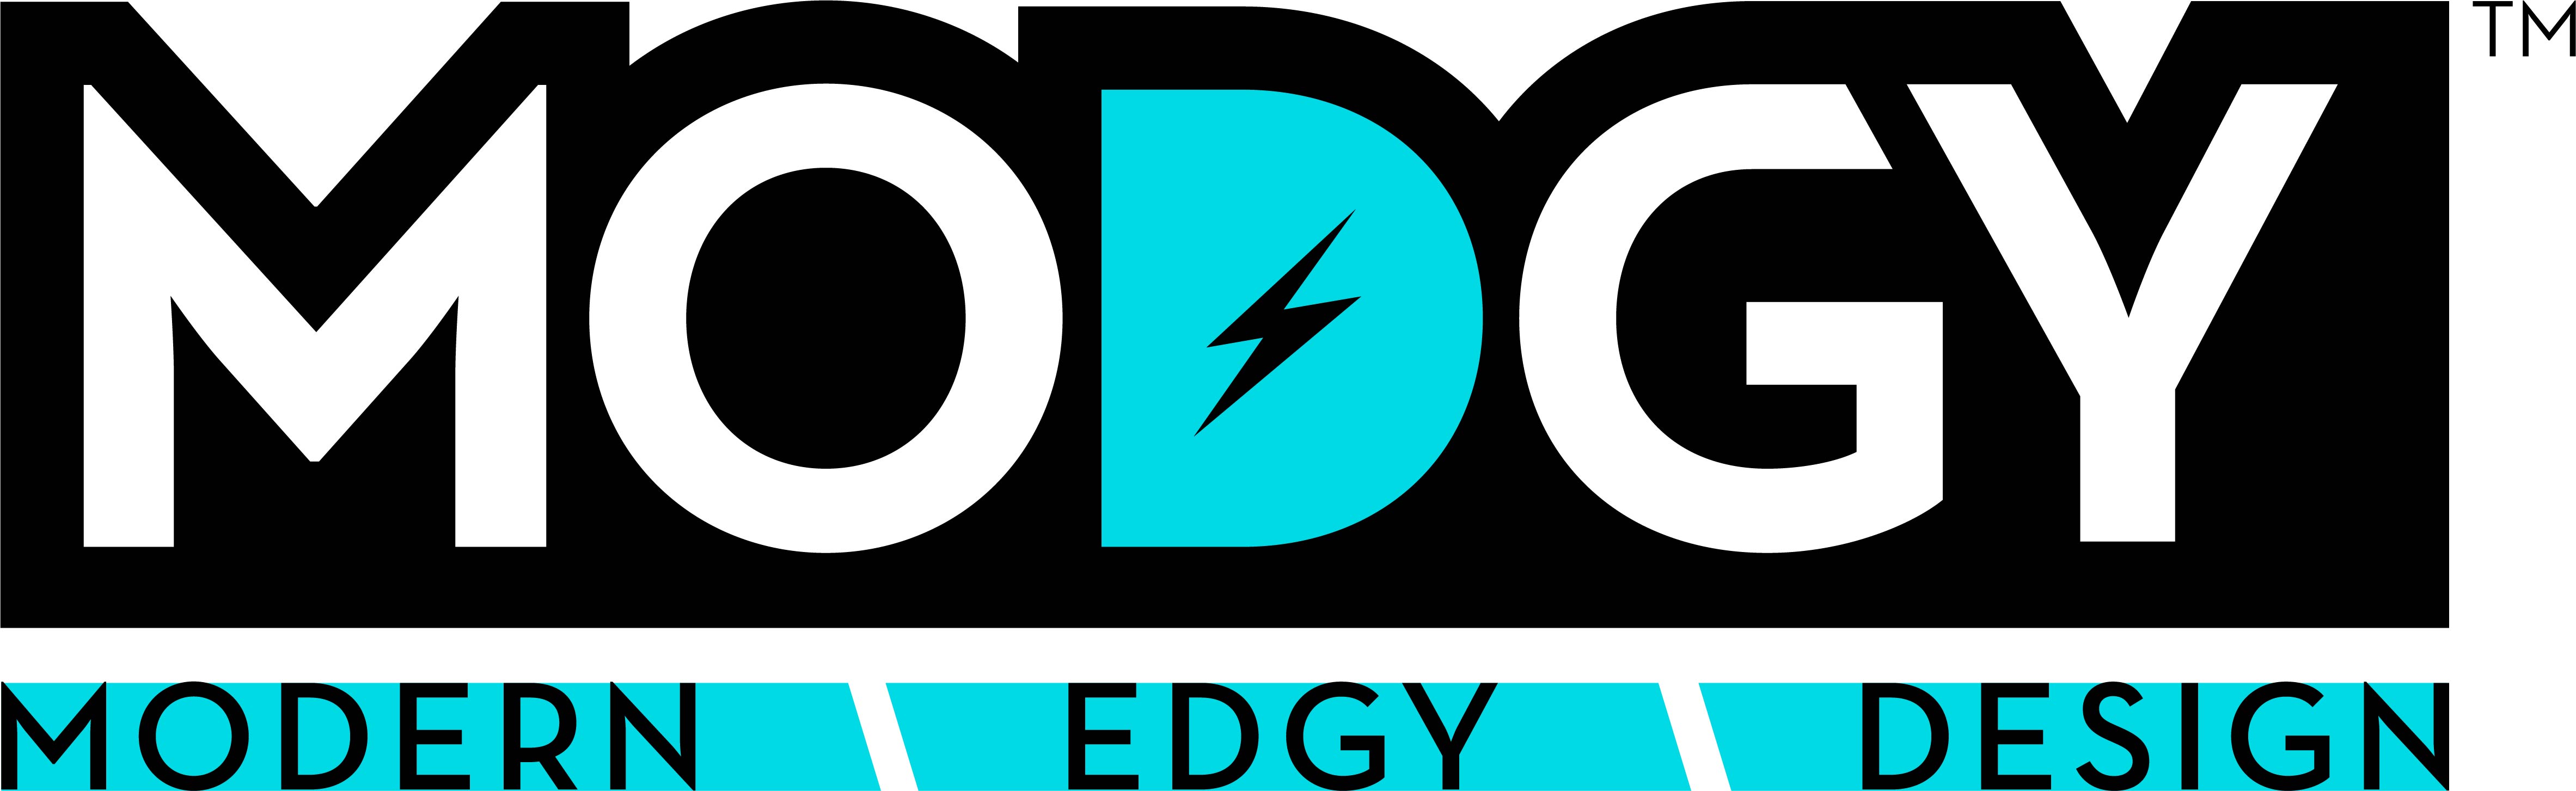 MODGY logo